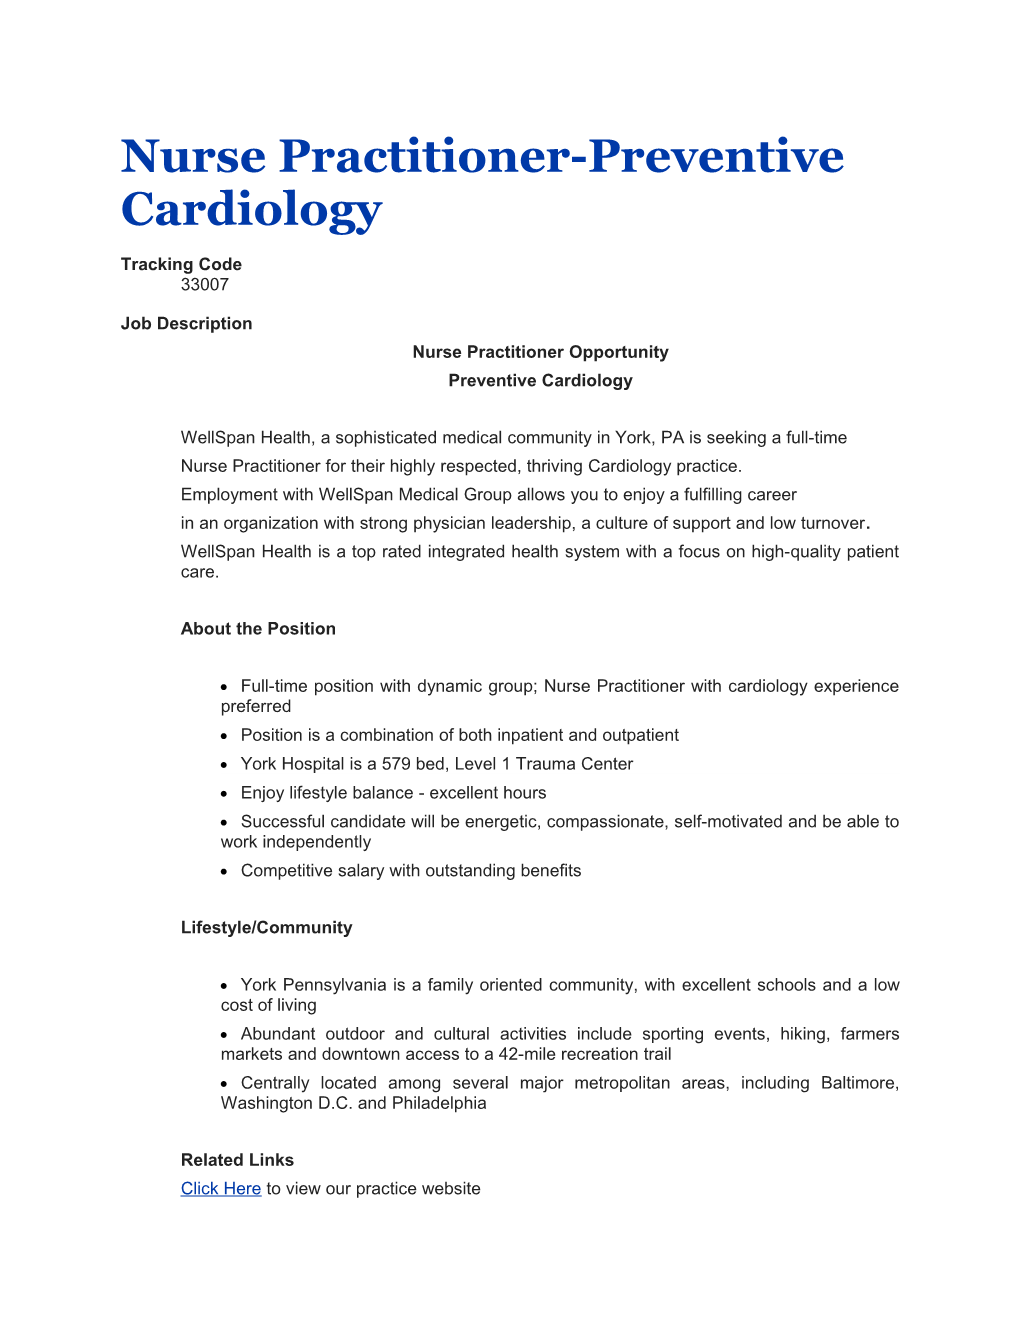 Nurse Practitioner-Preventive Cardiology